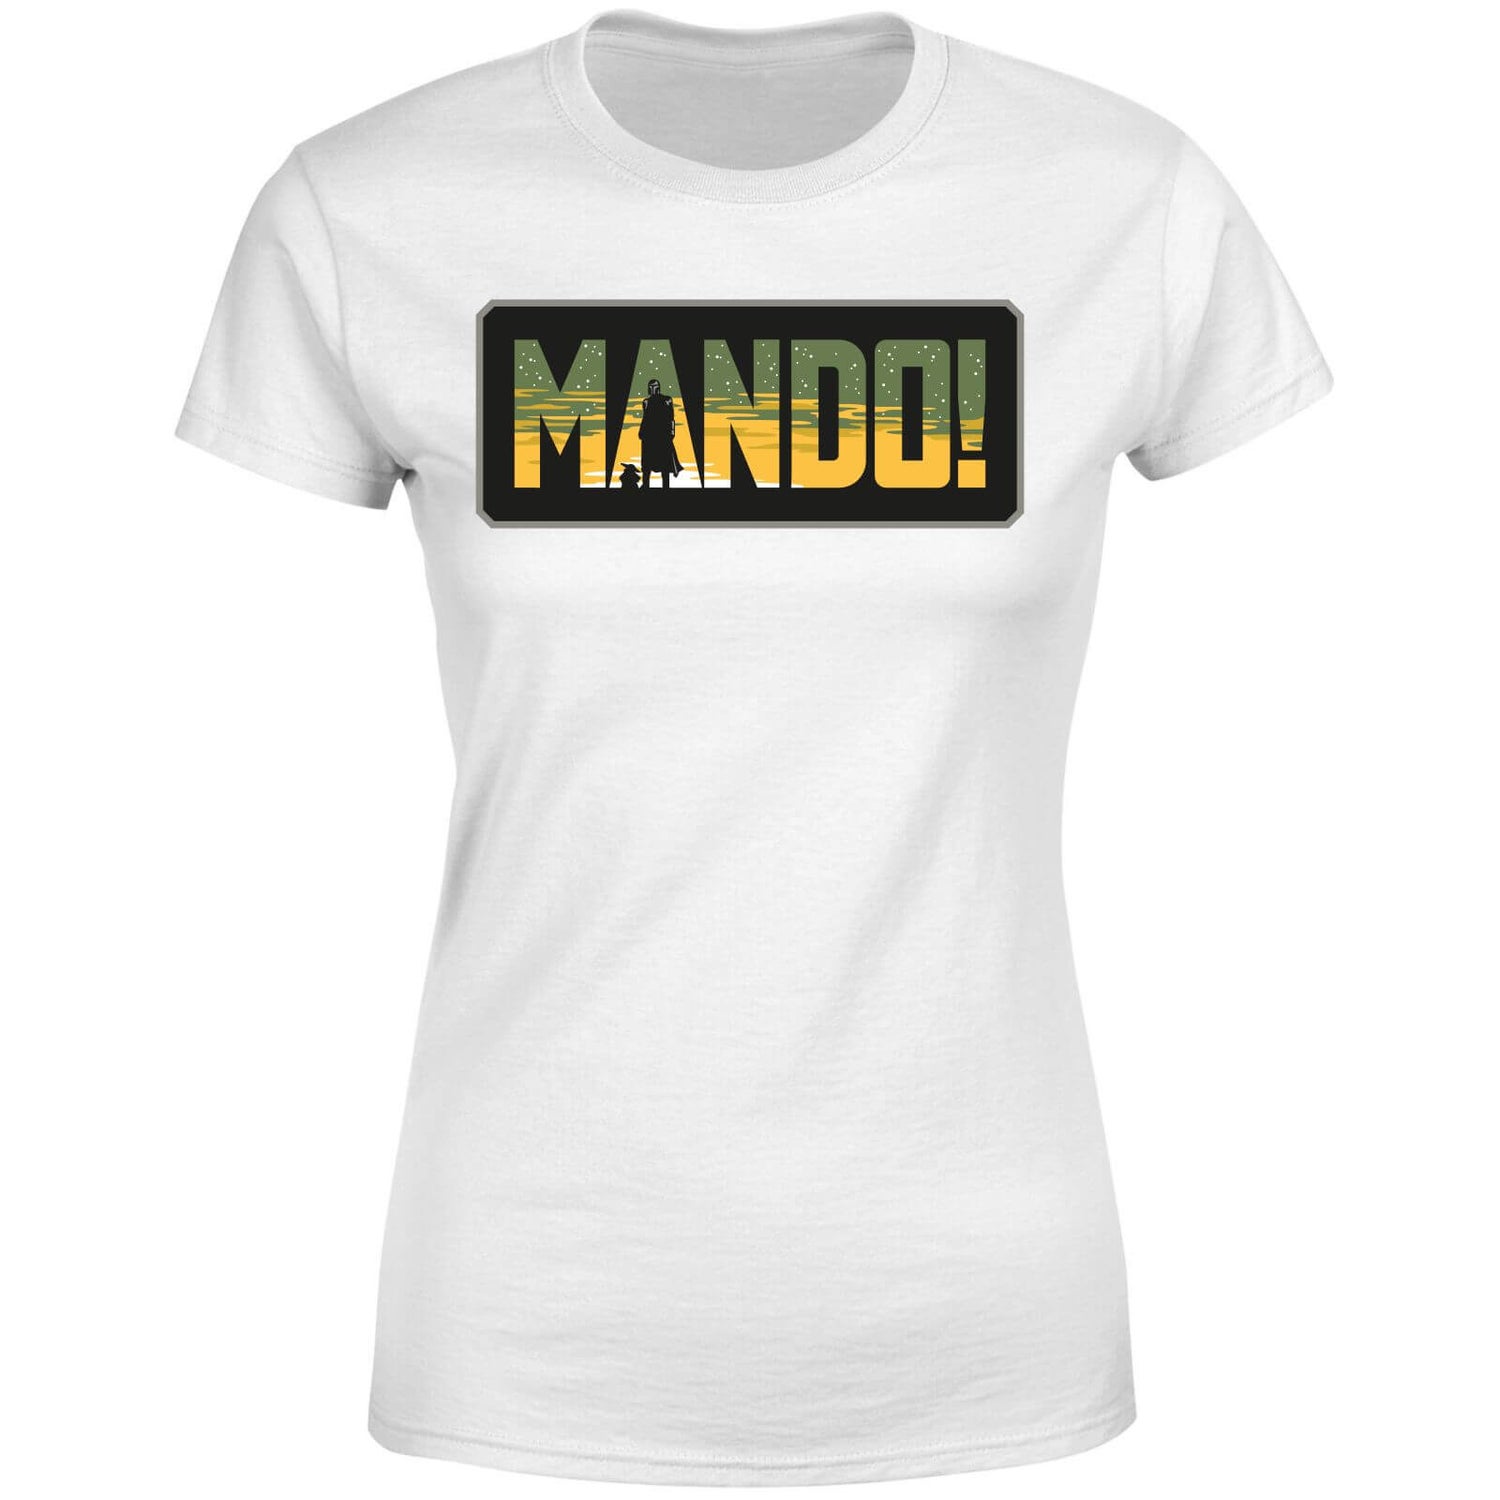 Star Wars The Mandalorian Mando! Women's T-Shirt - White